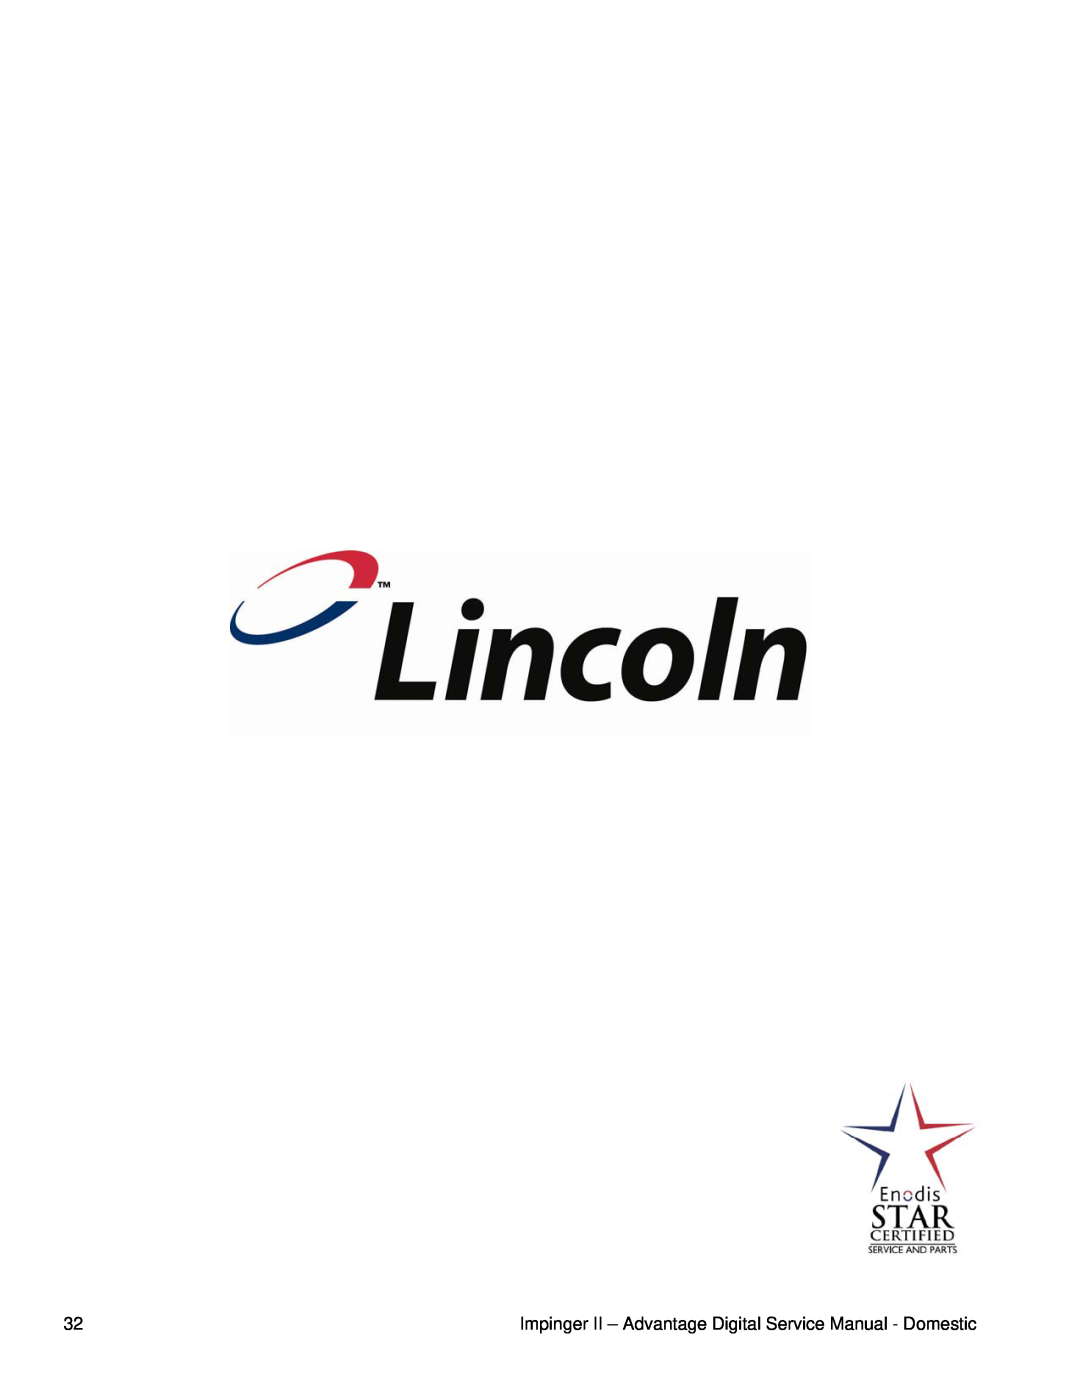 Lincoln 1131-000-A, 1133-000-A, 116-000-A, 1130-000-A, 1132-000-A, 1117-000-A service manual 